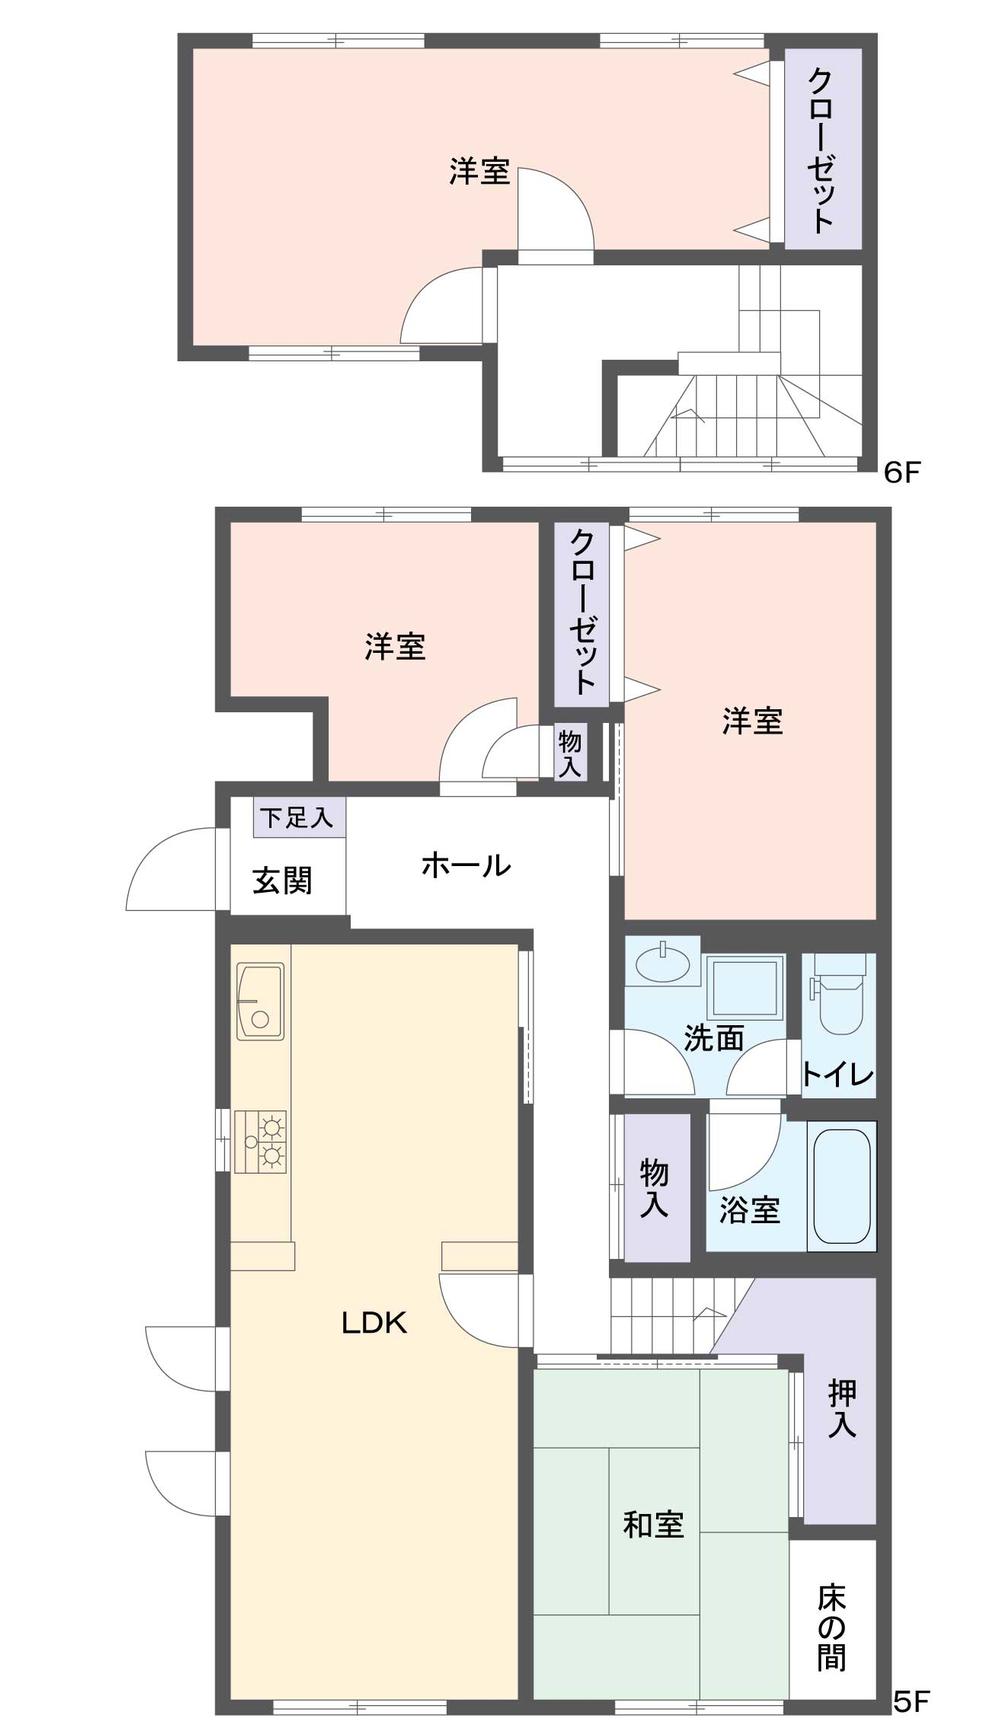 Floor plan. 4LDK, Price 11.8 million yen, Footprint 106.36 sq m , Balcony area 18.76 sq m